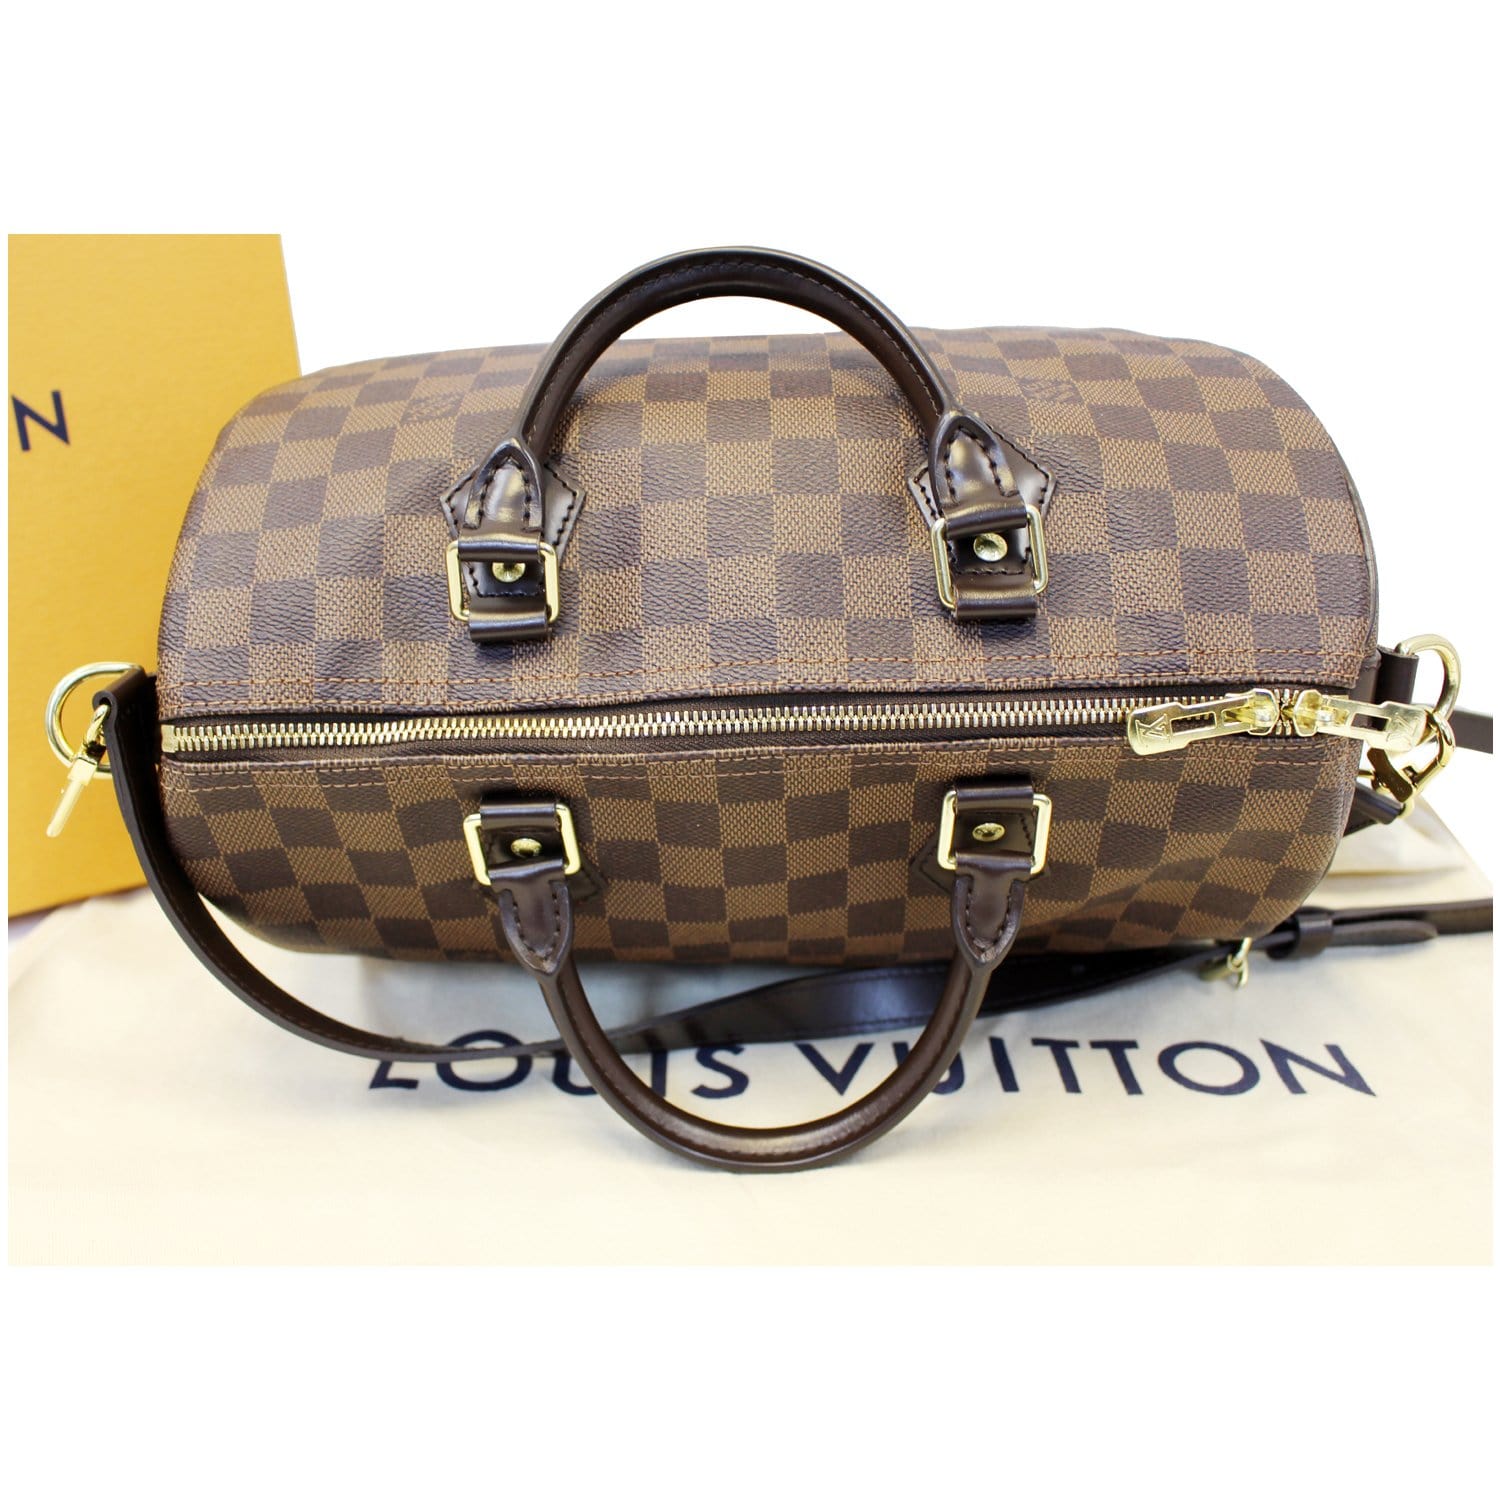 Louis Vuitton Speedy 30 Shoulder Bag